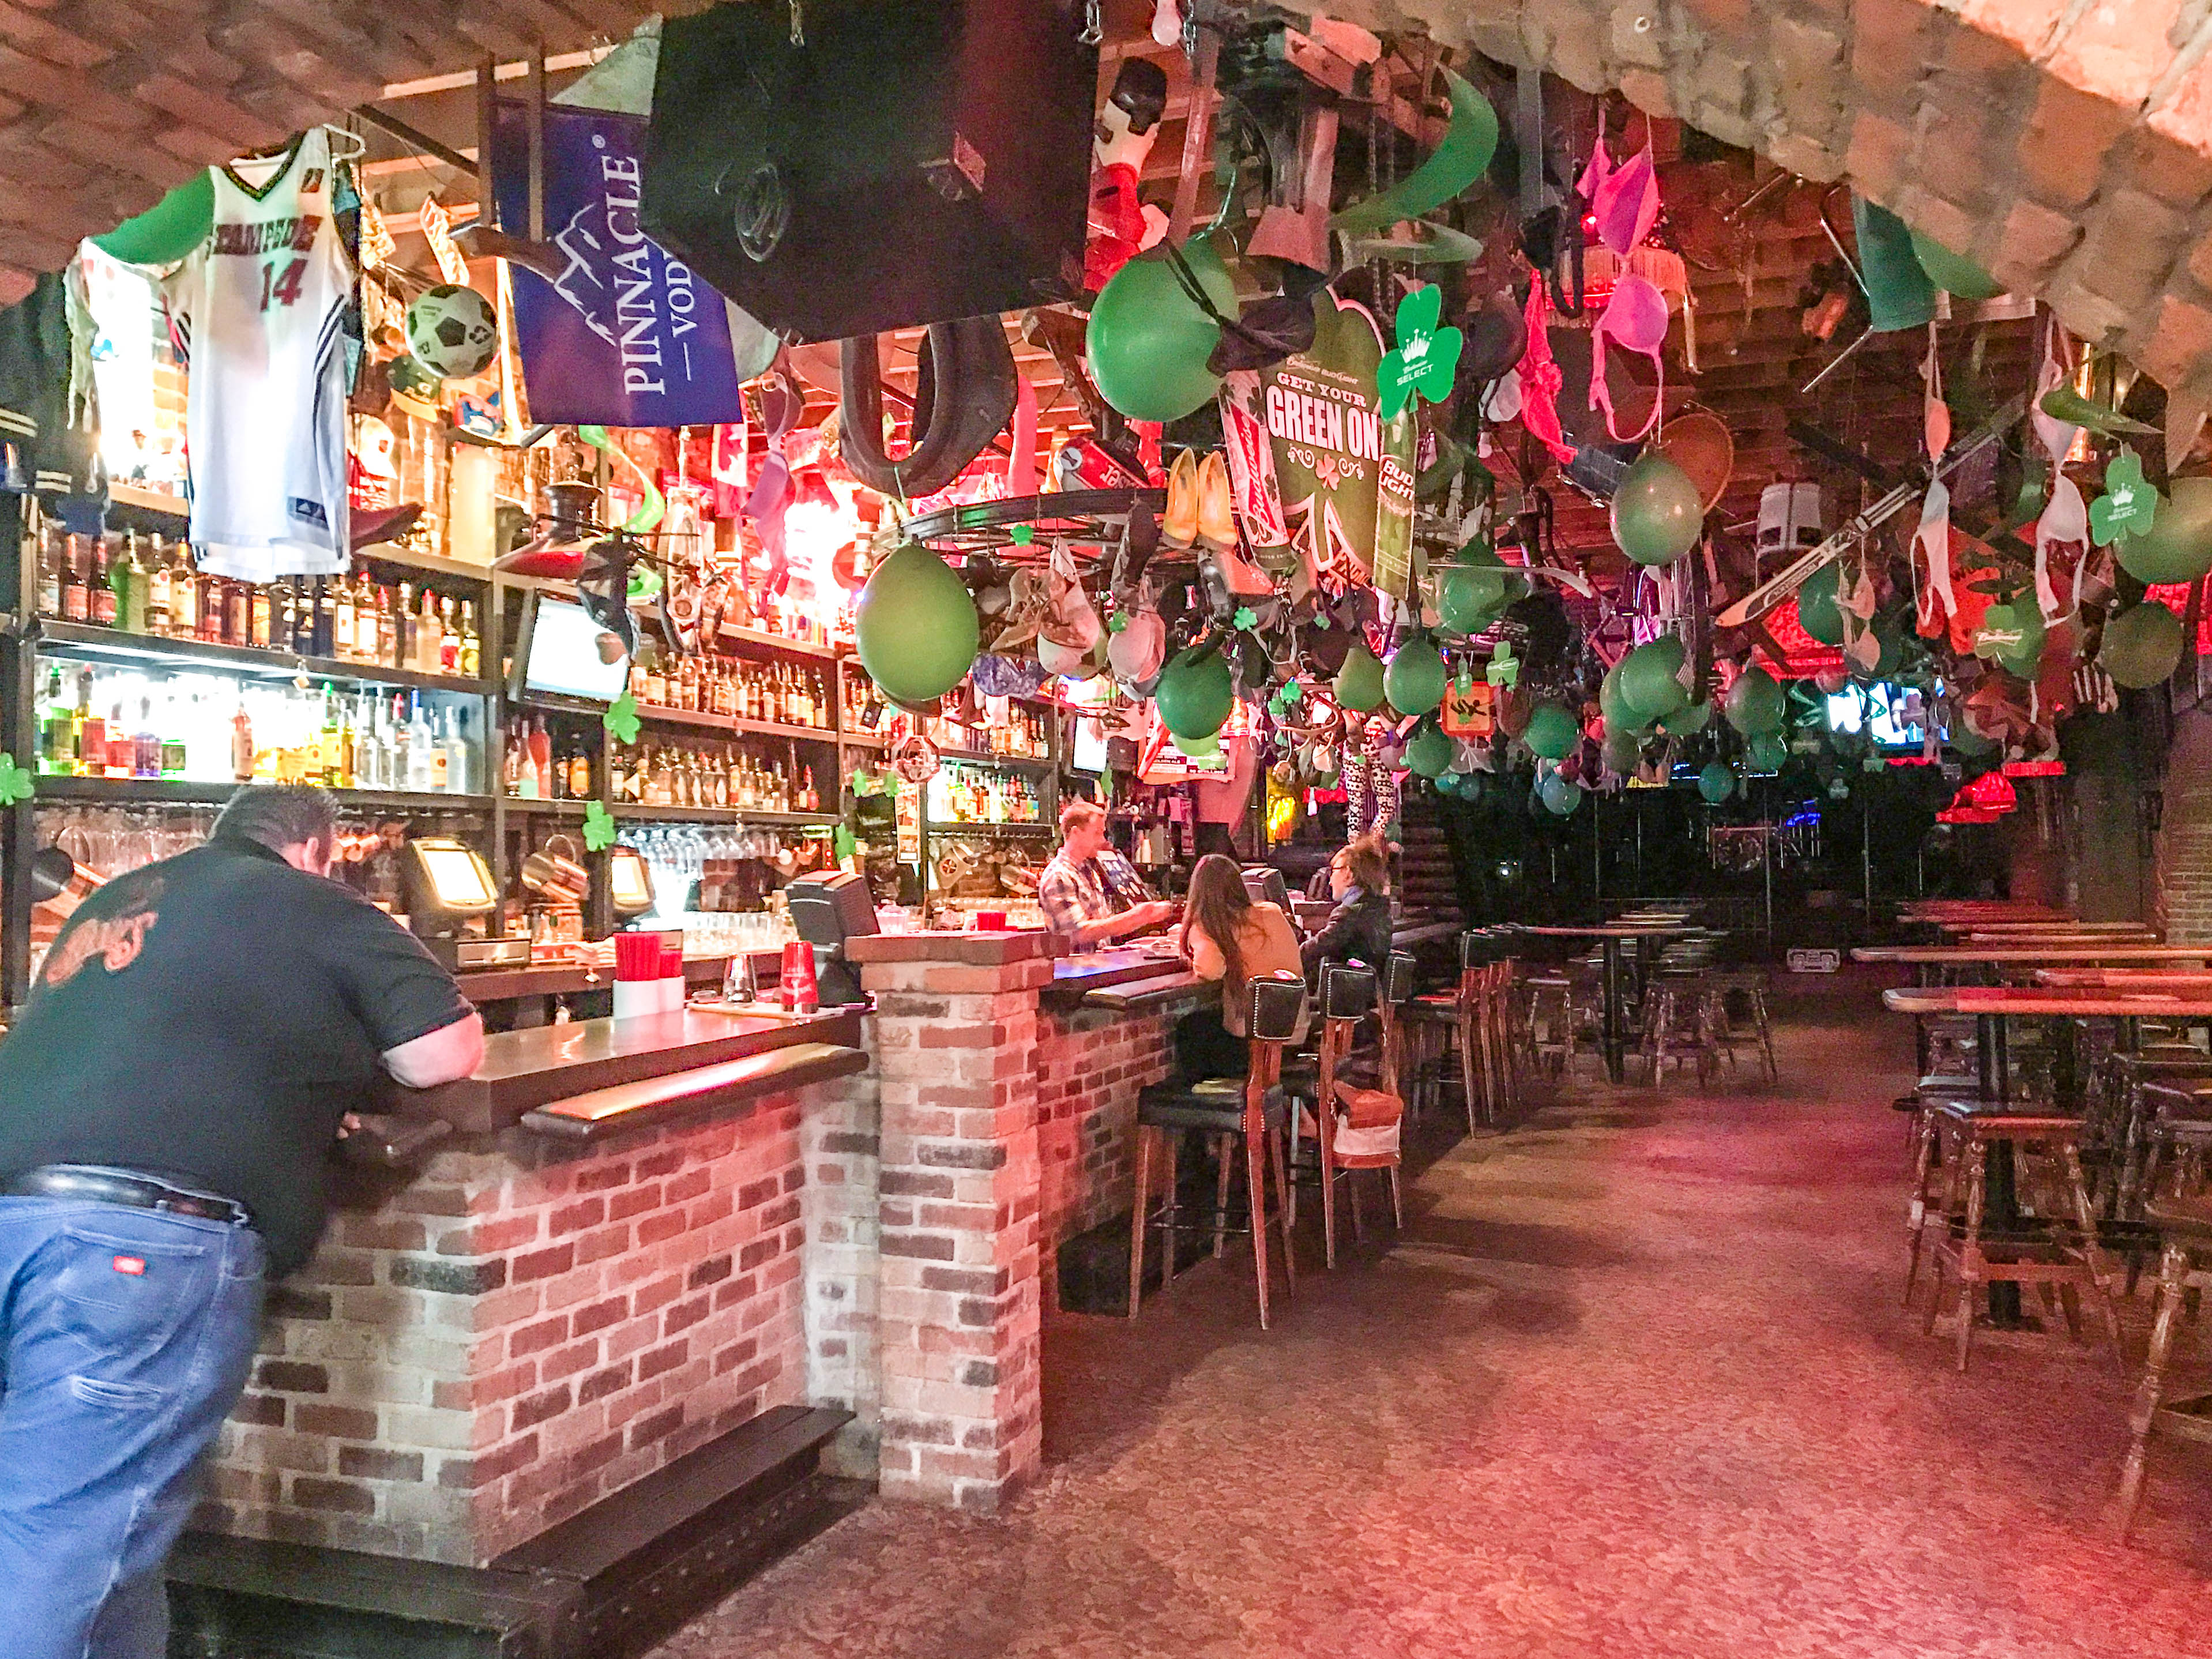 The Best Bars in Boise - Hannah's